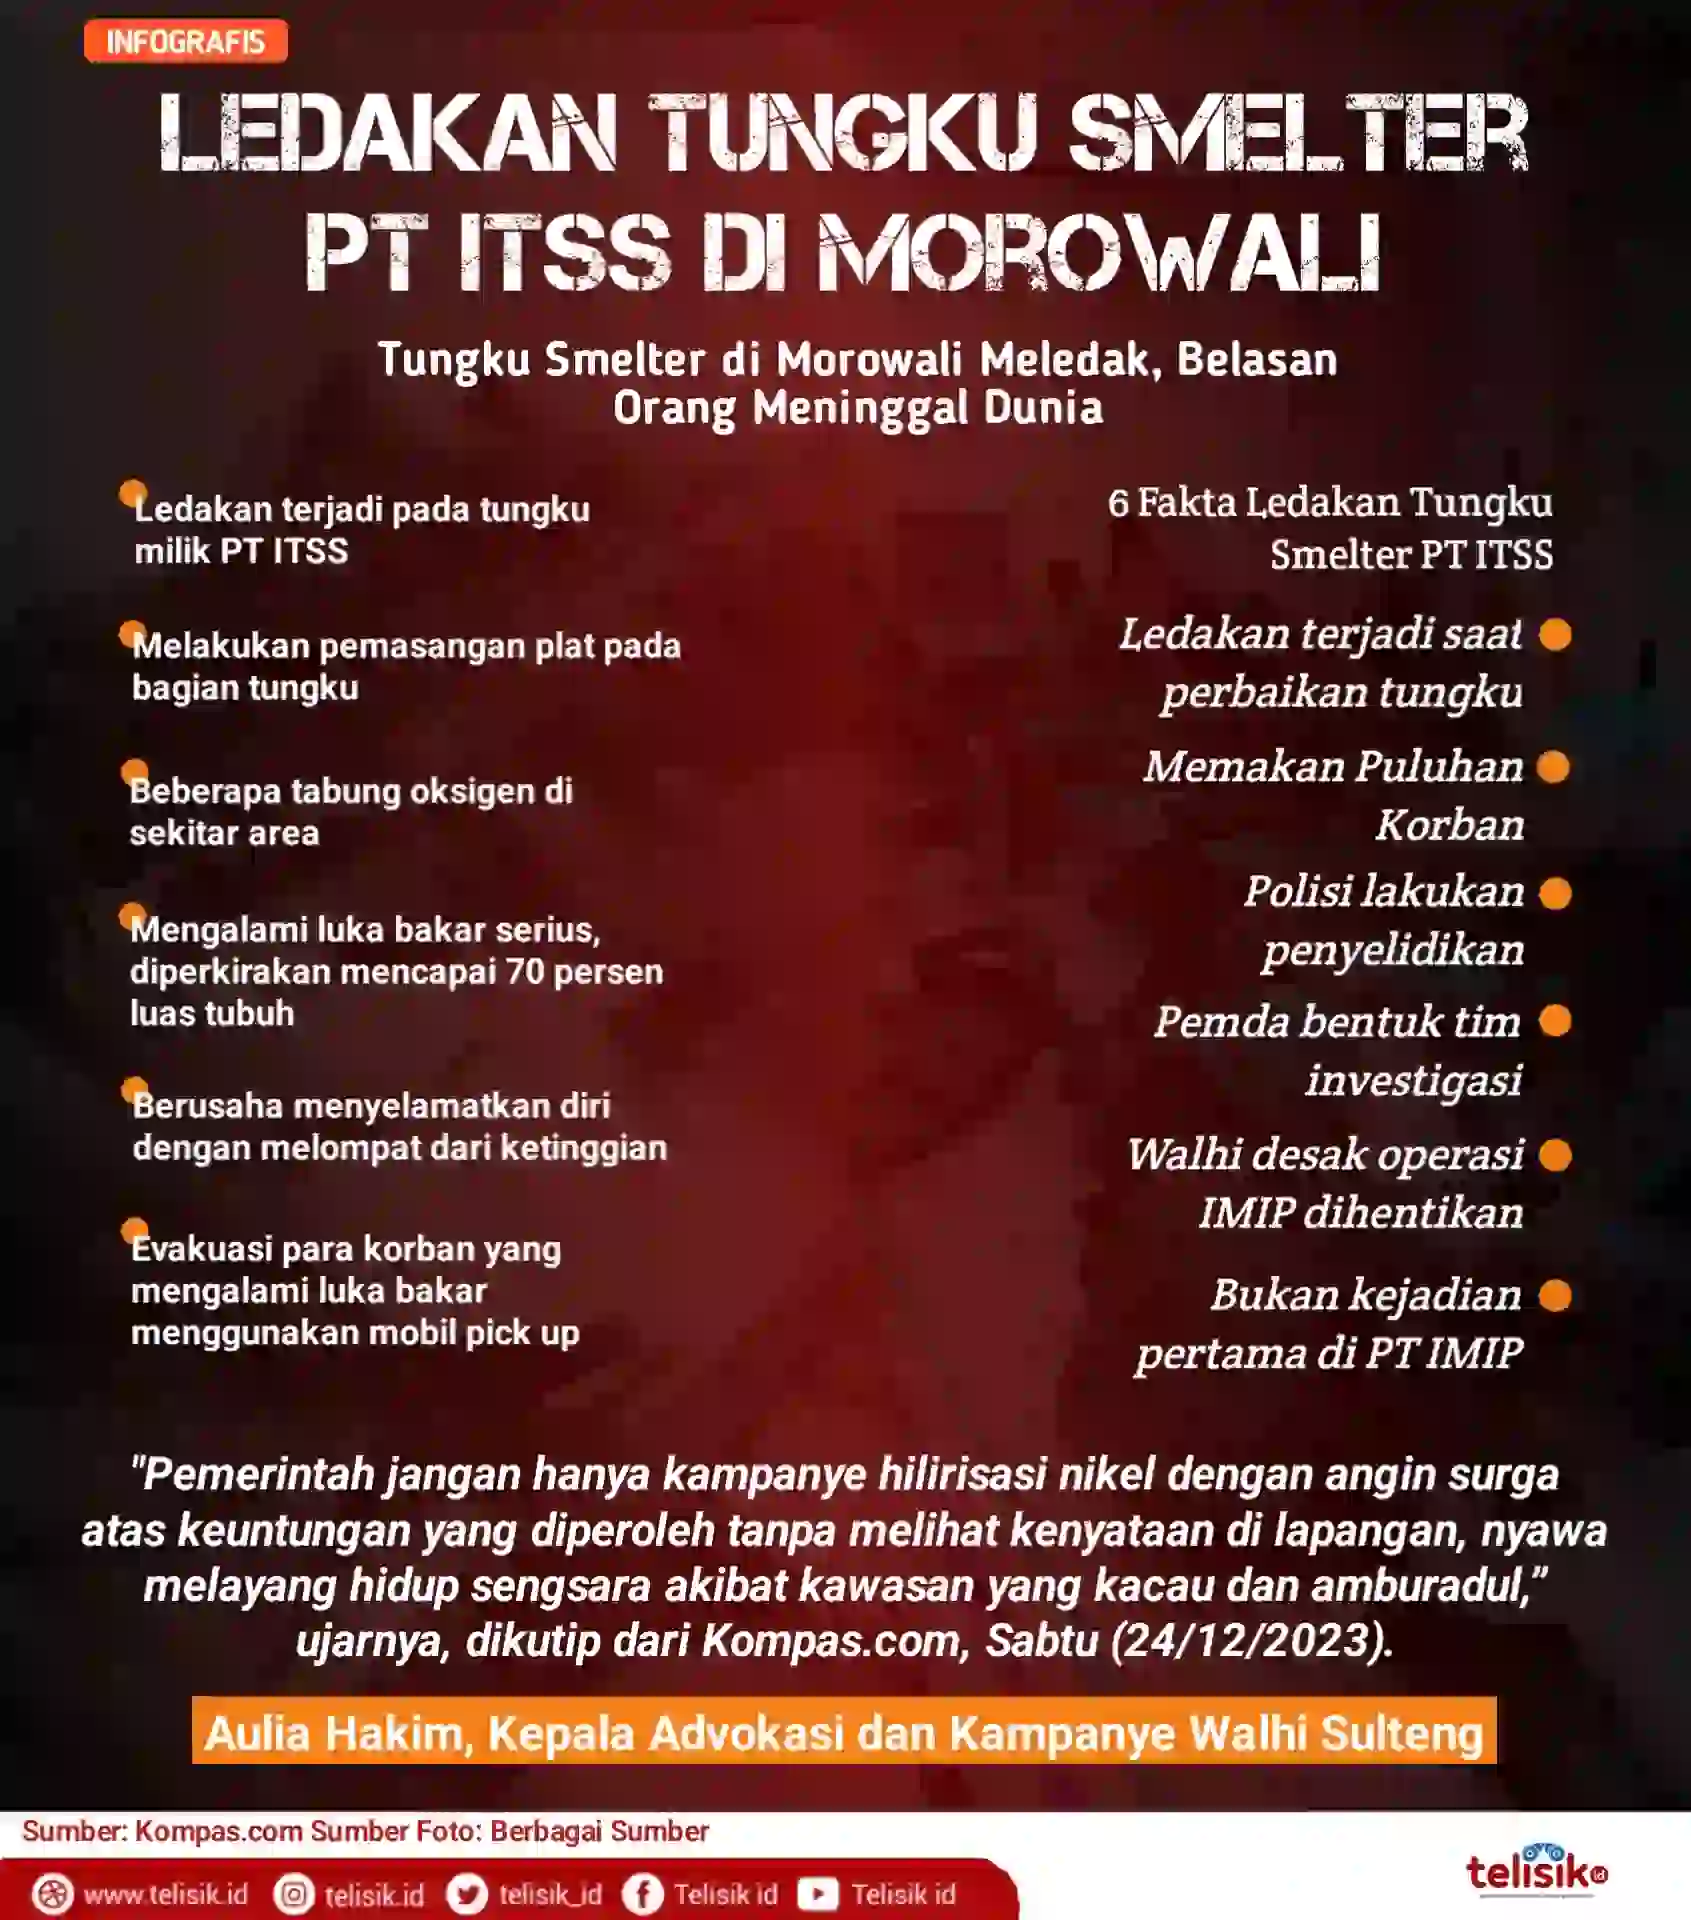 Infografis: Ledakan Tungku Smelter PT ITSS di Morowali 